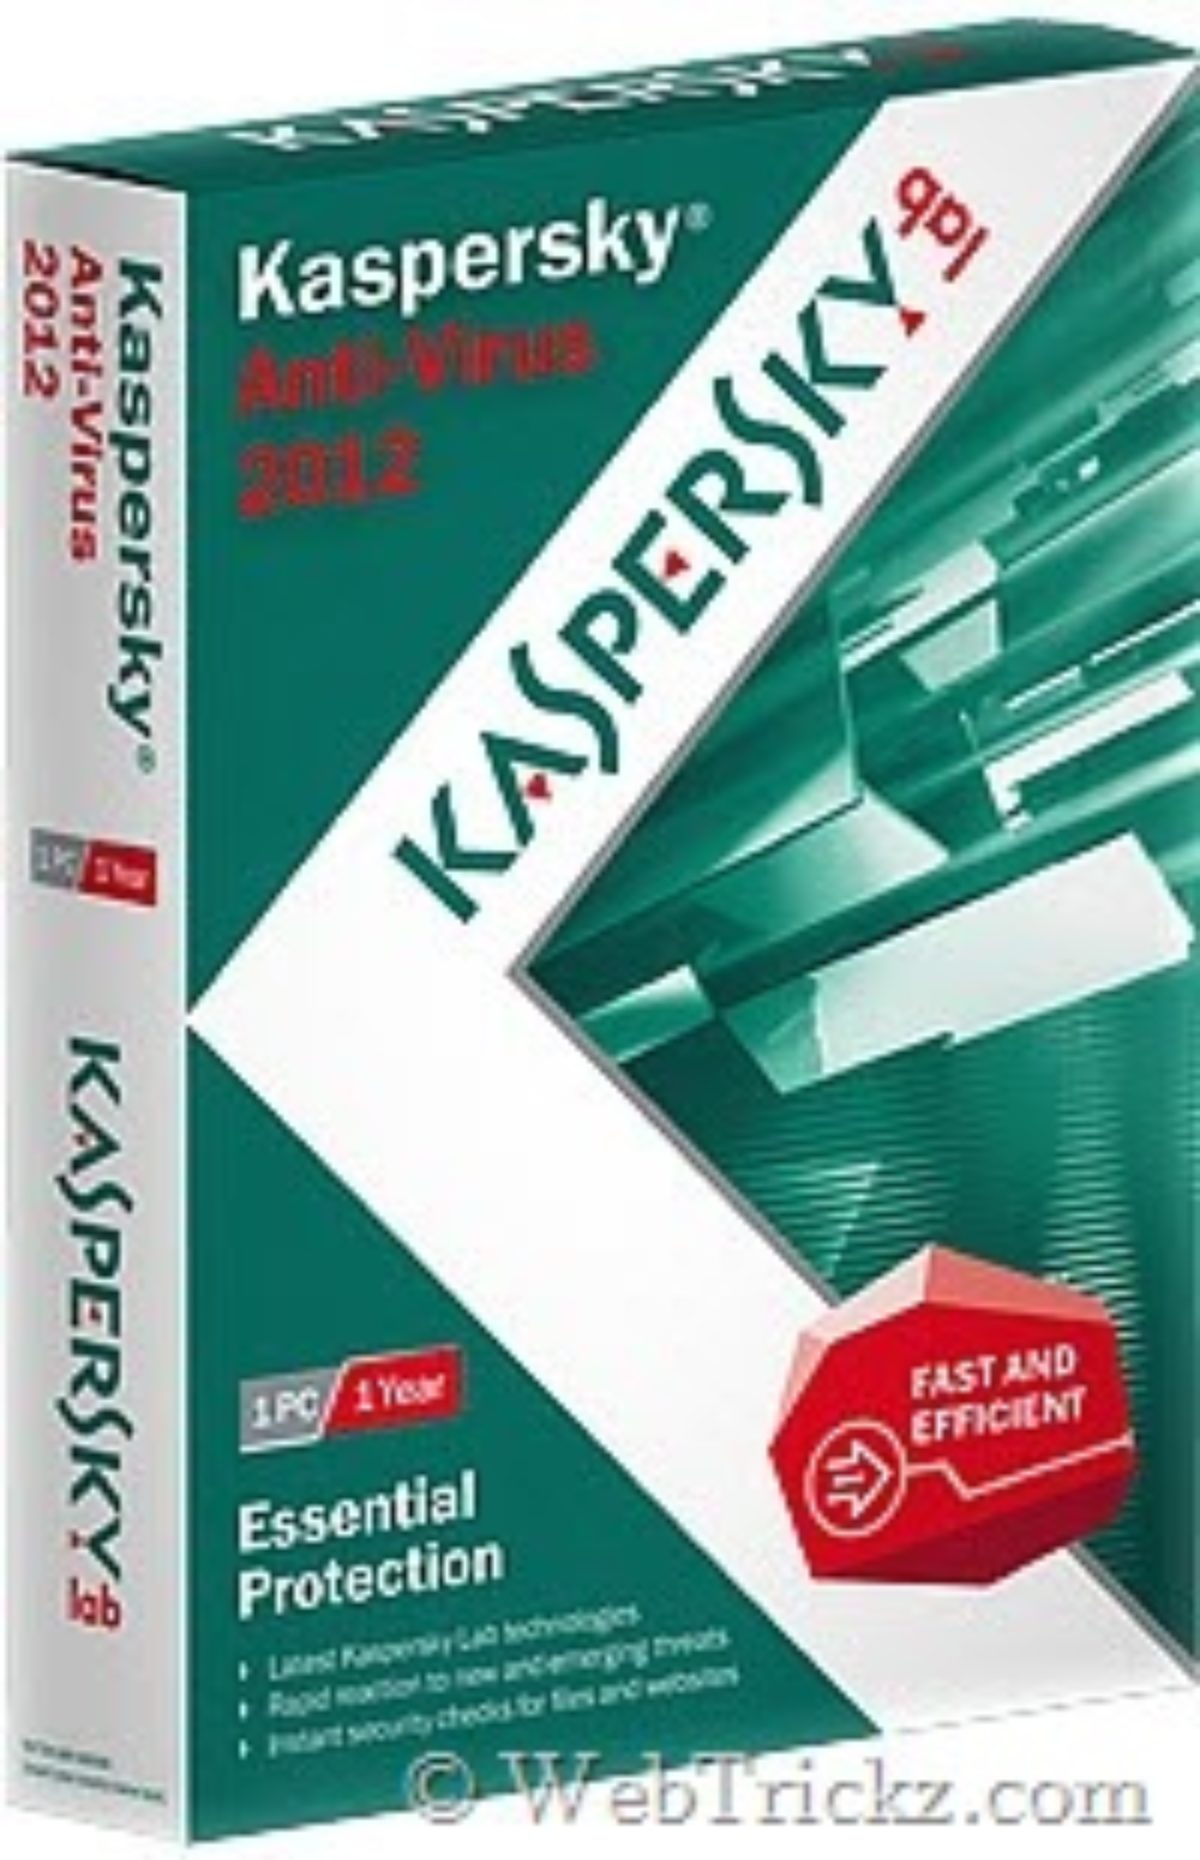 kaspersky computer downloads gratuitos 2012